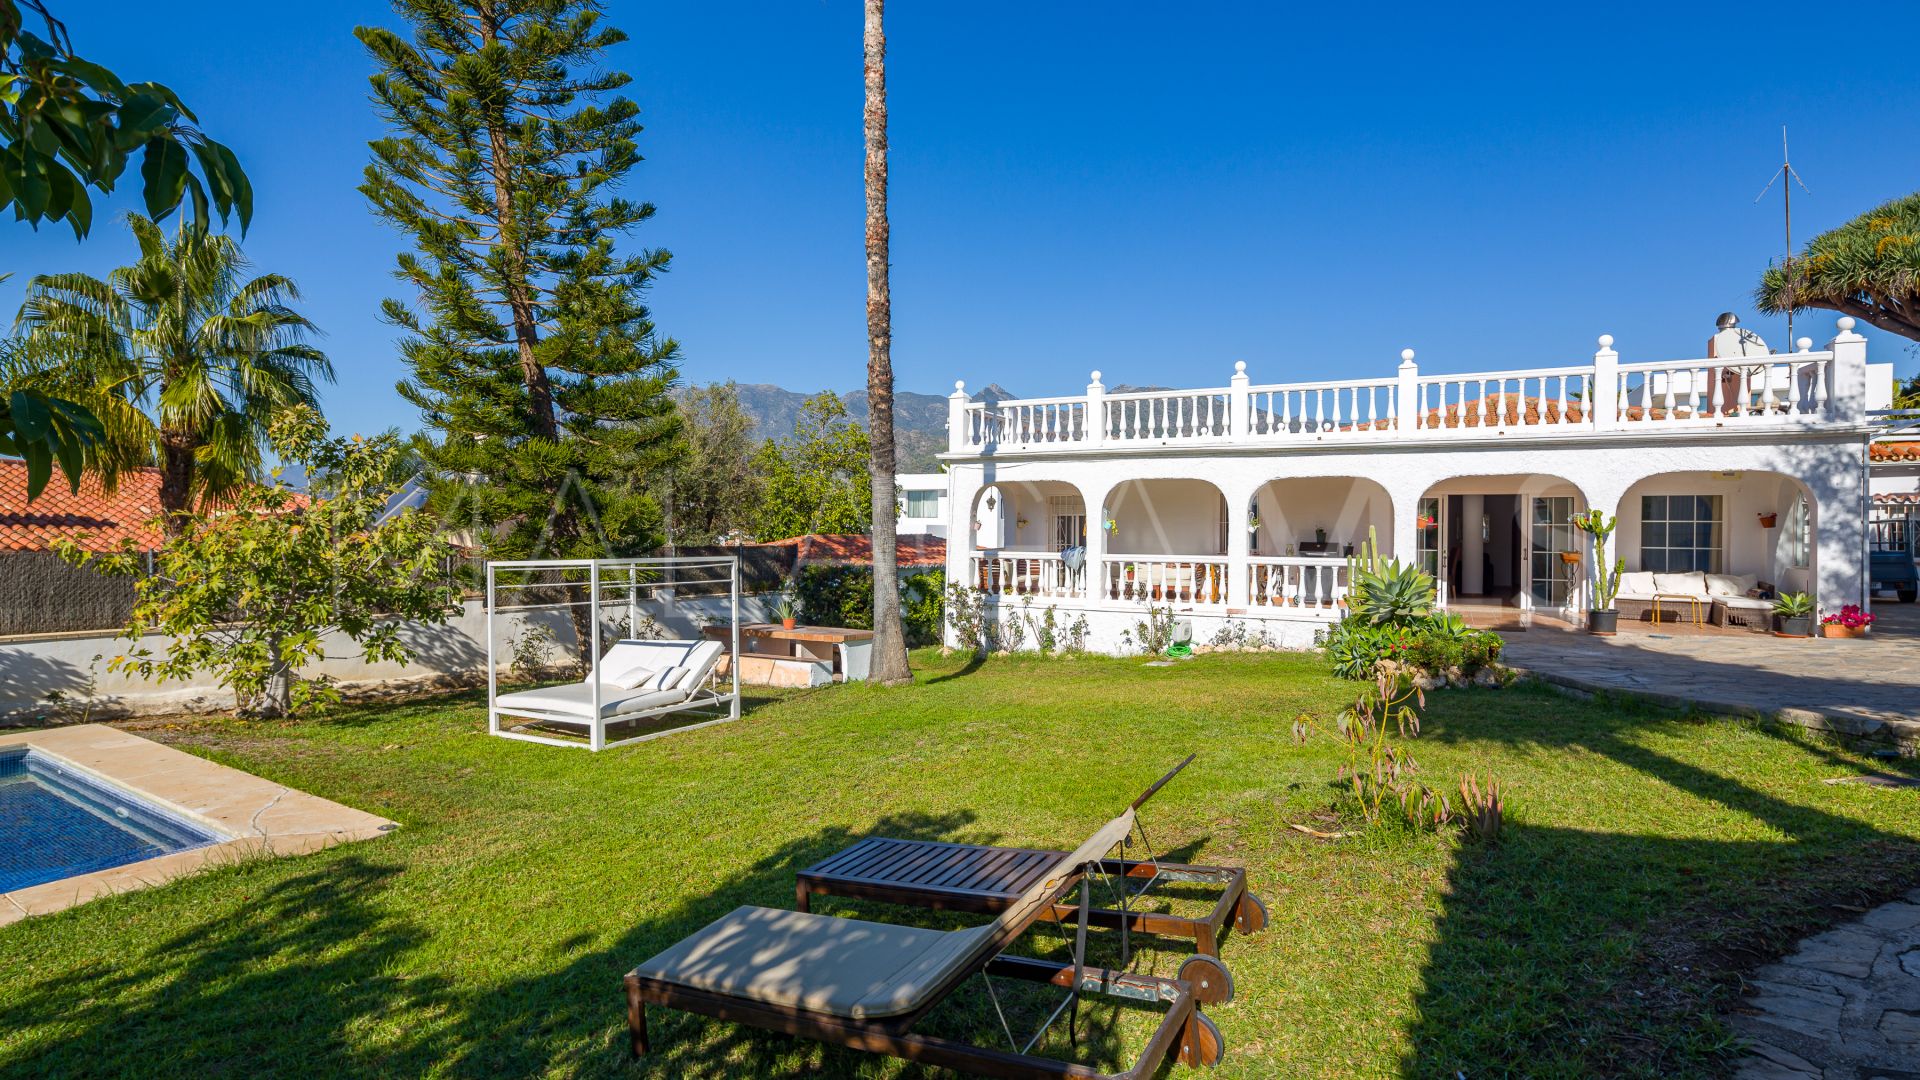 El Real Panorama villa for sale